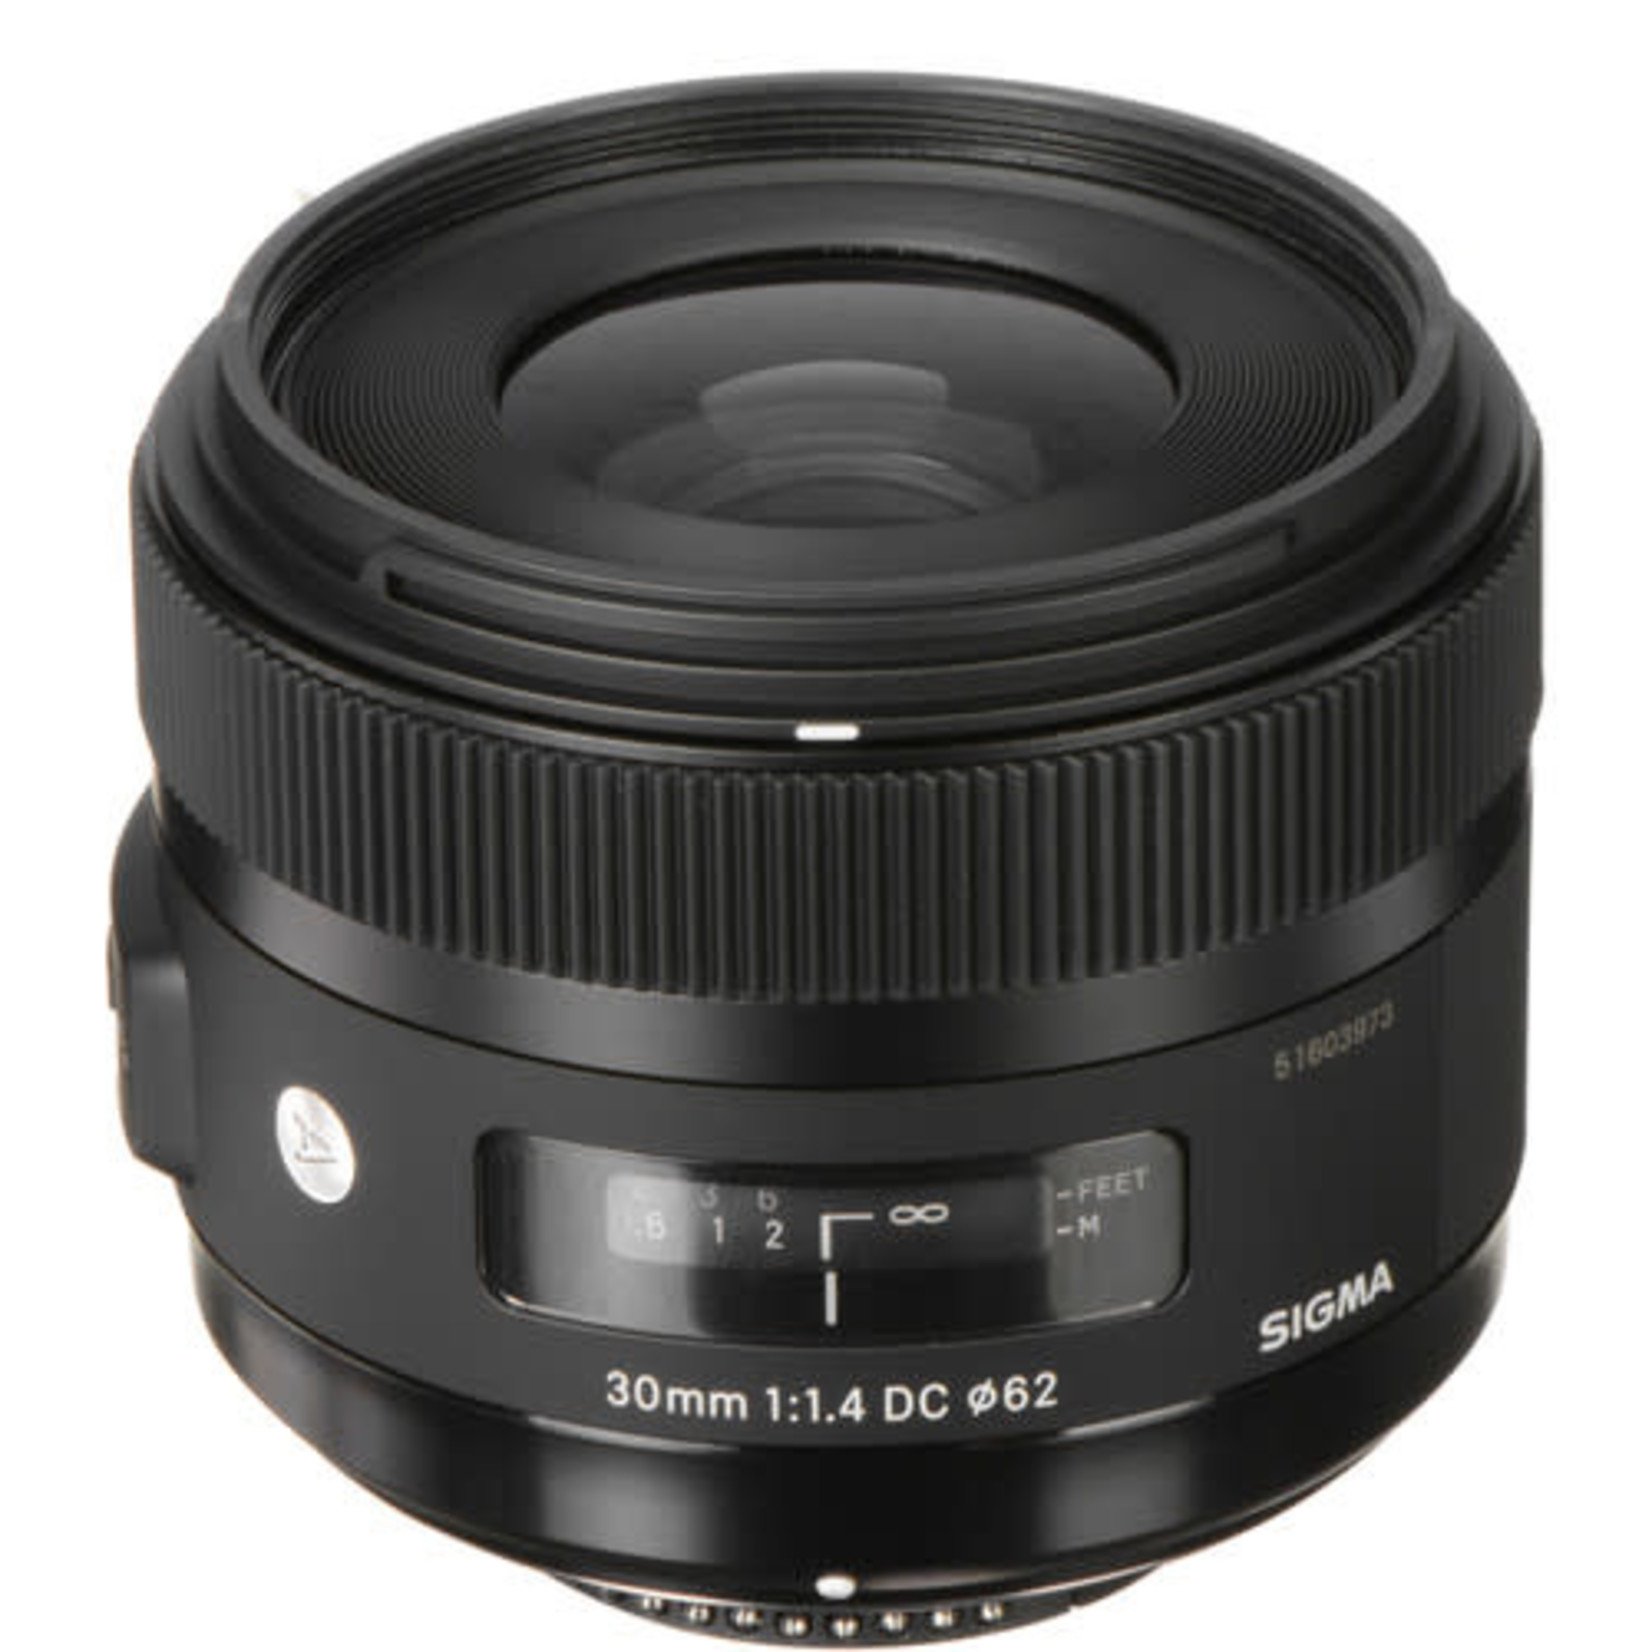 Sigma Sigma 30mm f/1.4 DC HSM Art Lens for Nikon F